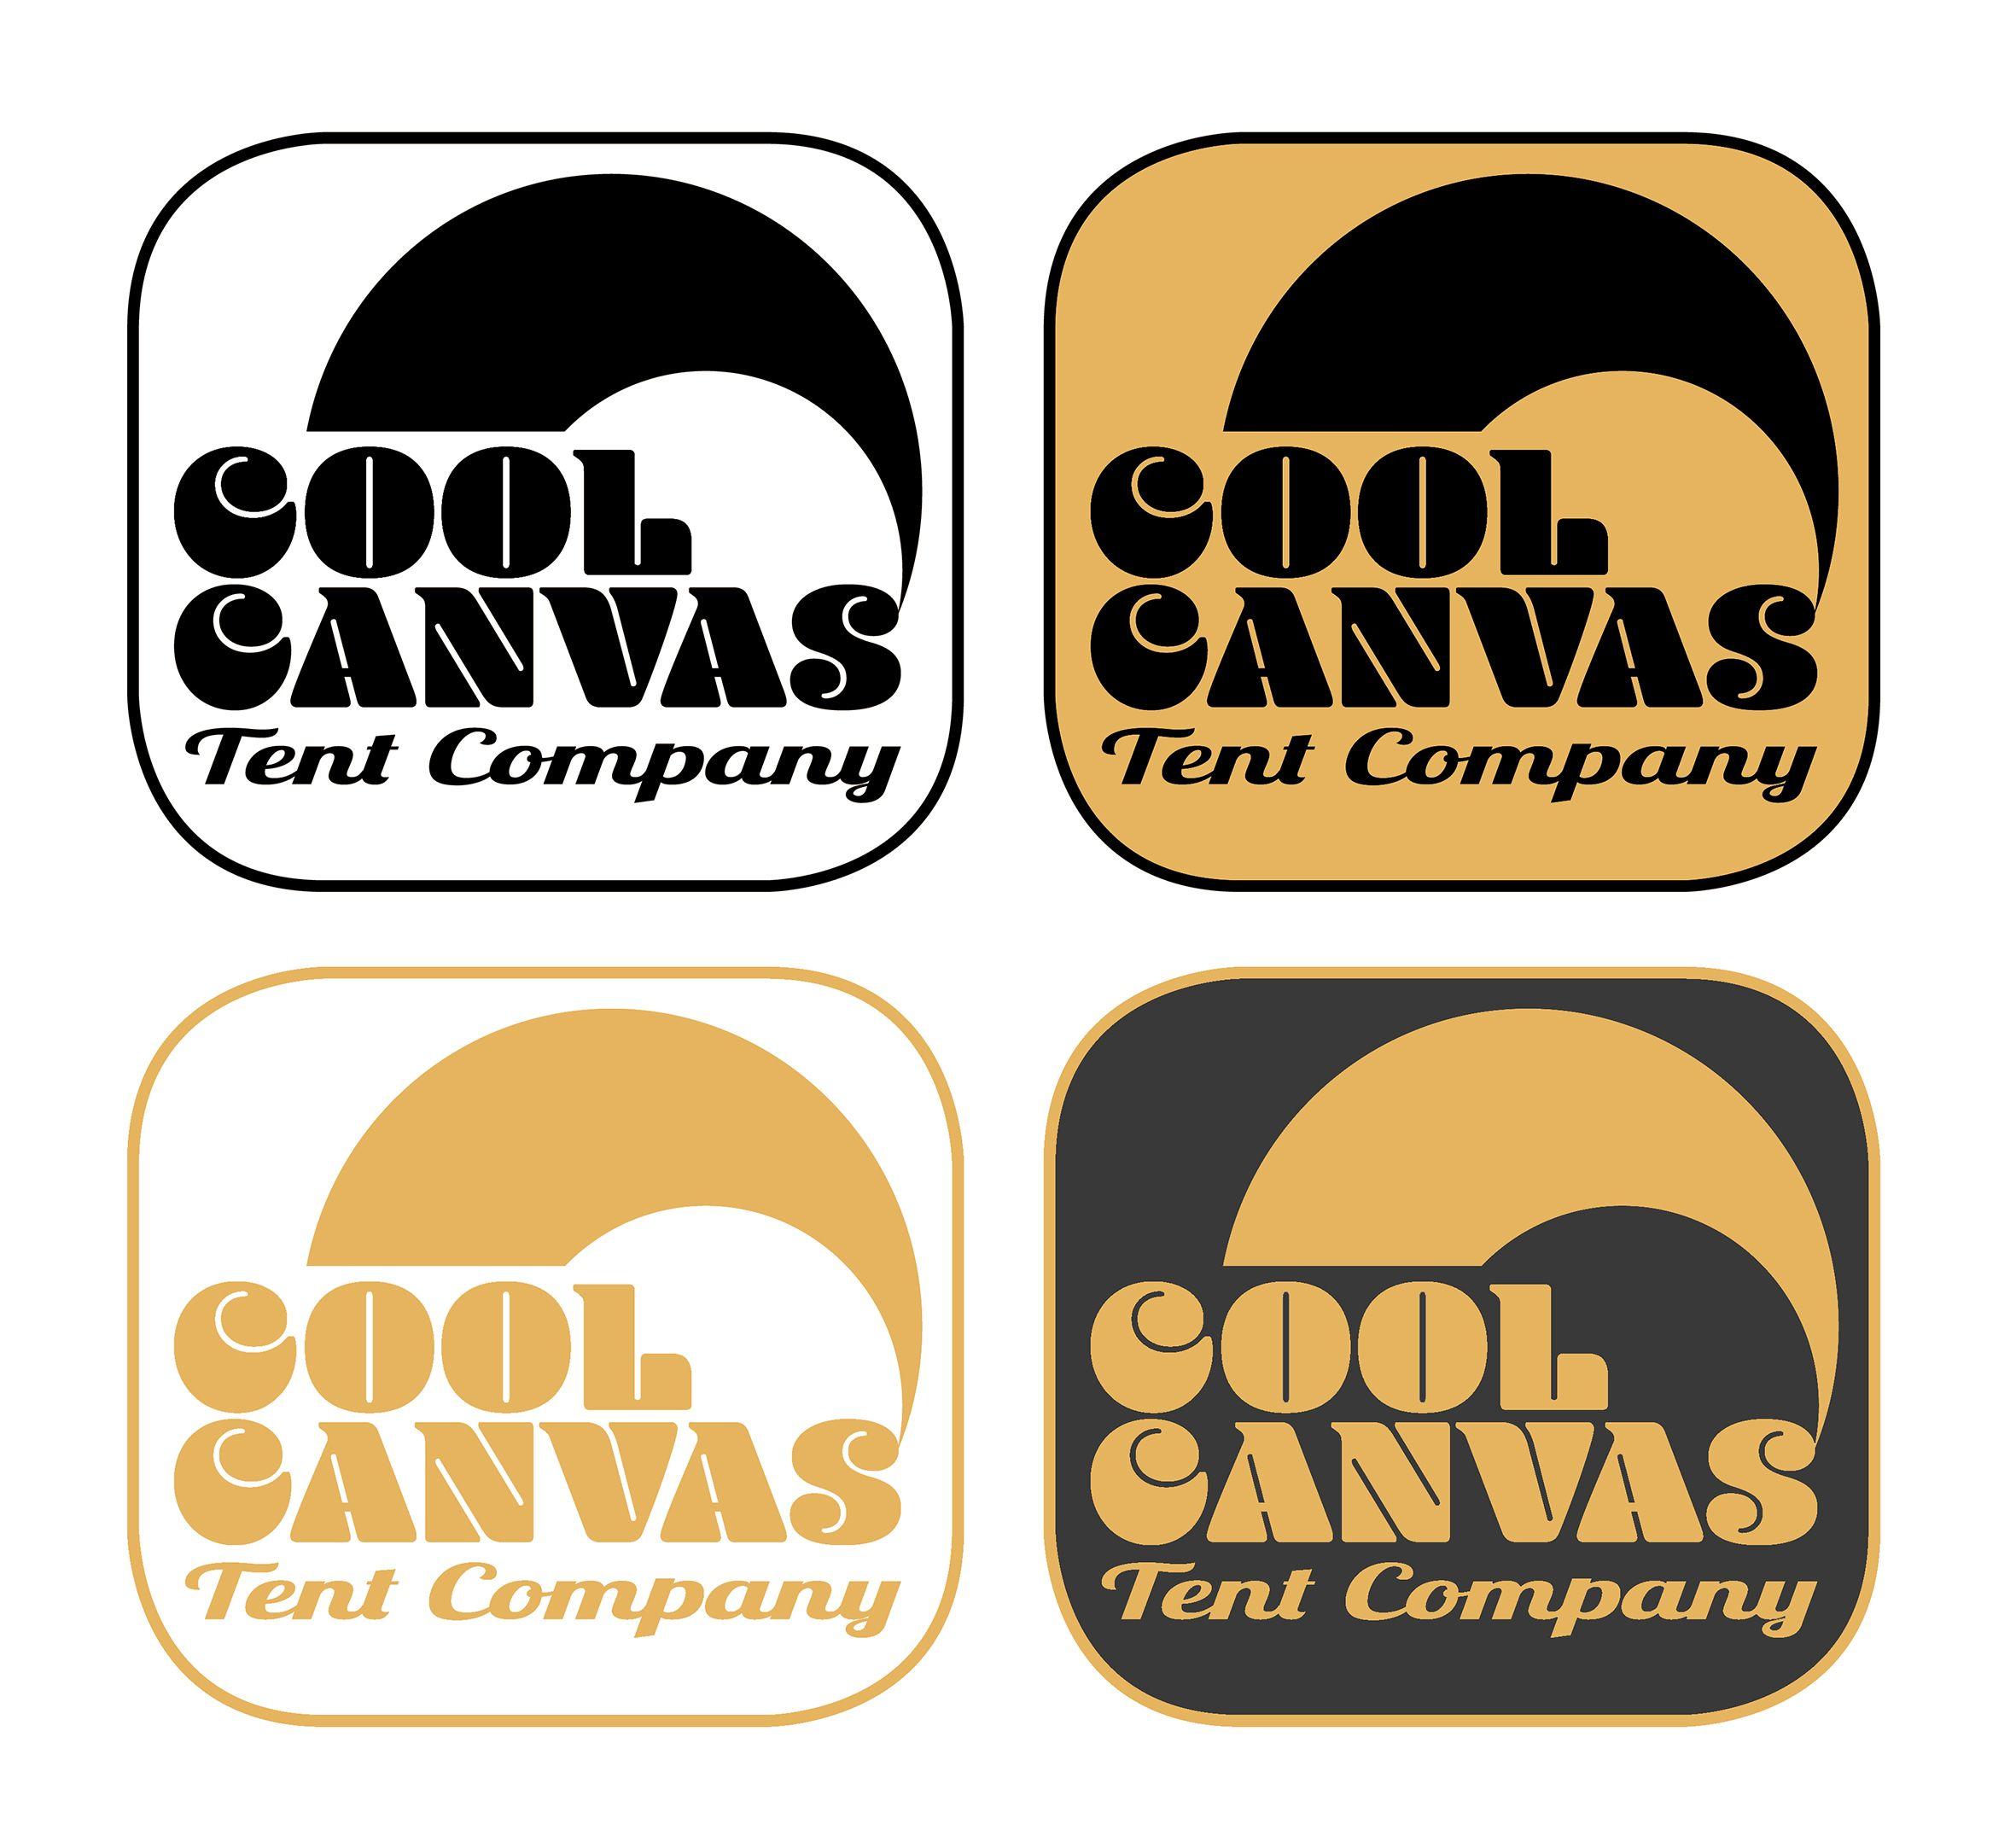 Cool Old Company Logo - Logo design for Cool Canvas Tent Co. Ashton Art